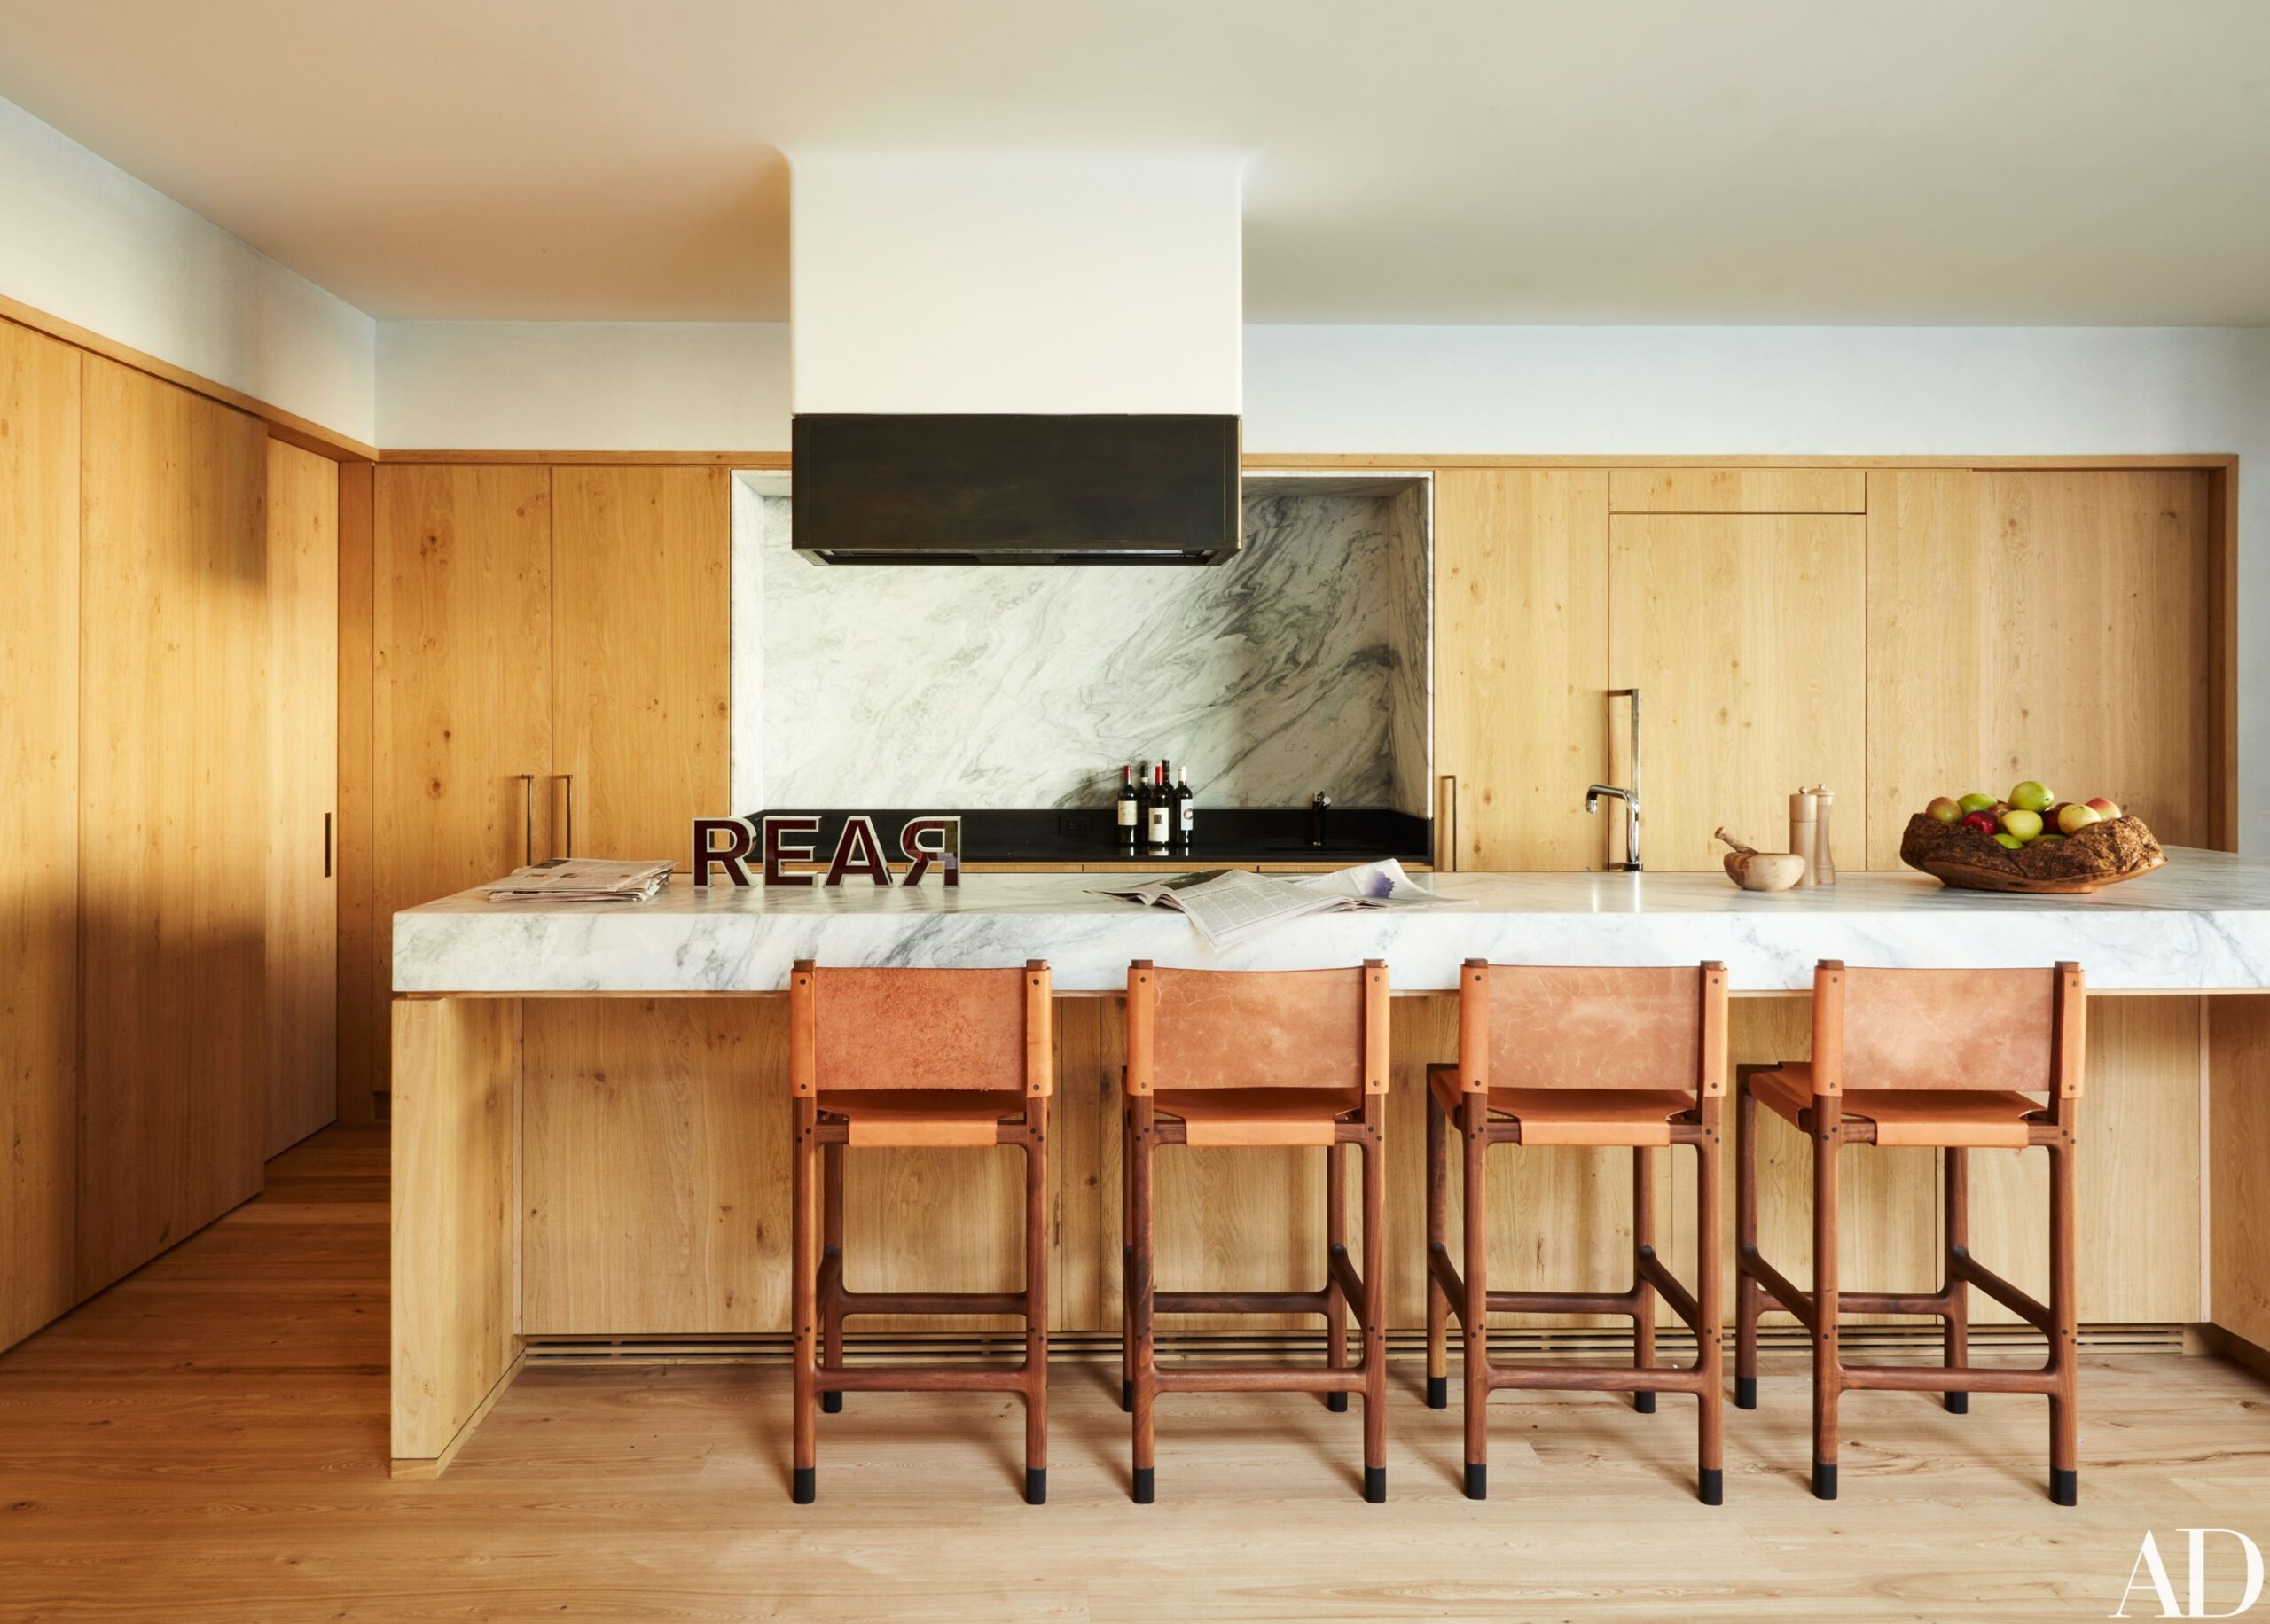 7 Sleek & Inspiring Contemporary Kitchen Design Ideas  - contemporary kitchen design ideas